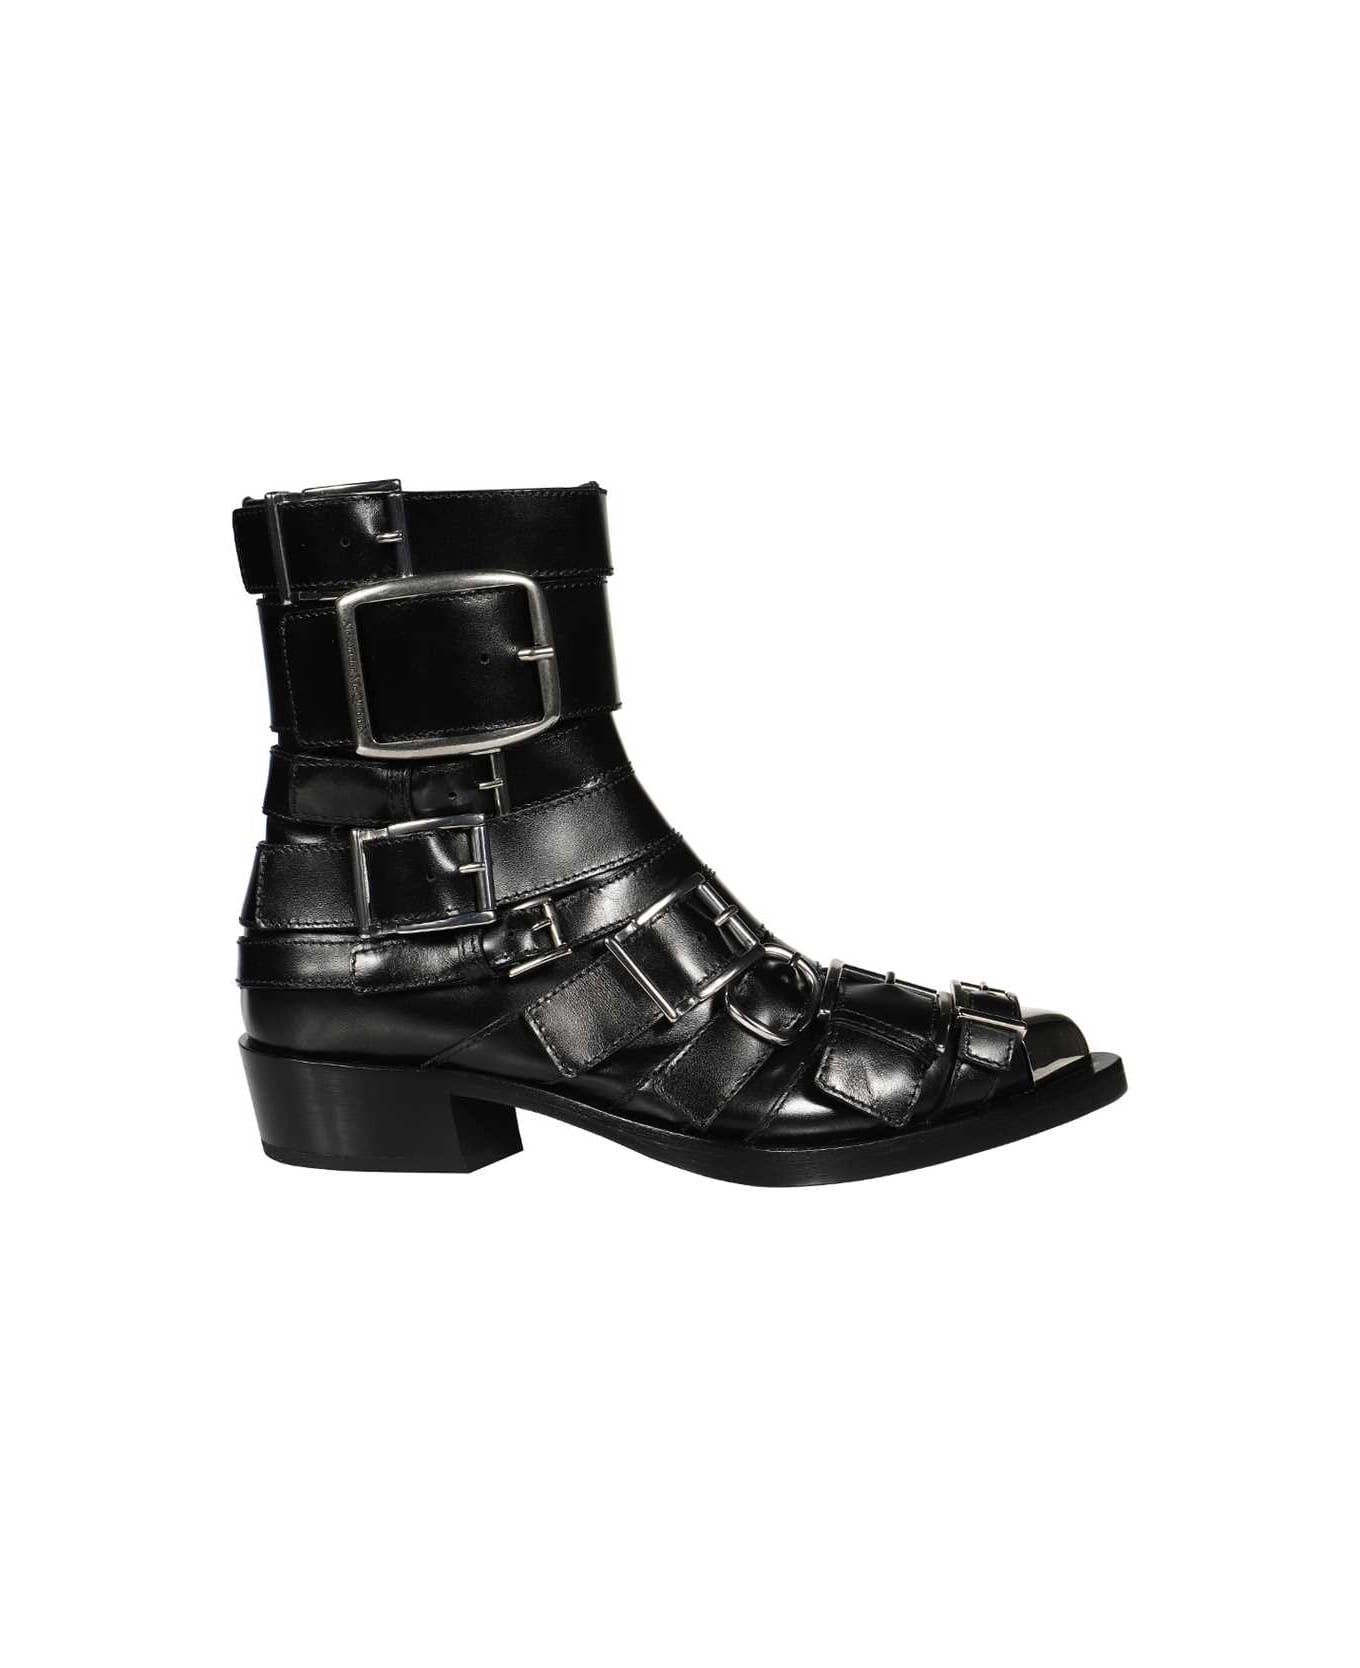 Alexander McQueen Sandals Ankle Boots - black